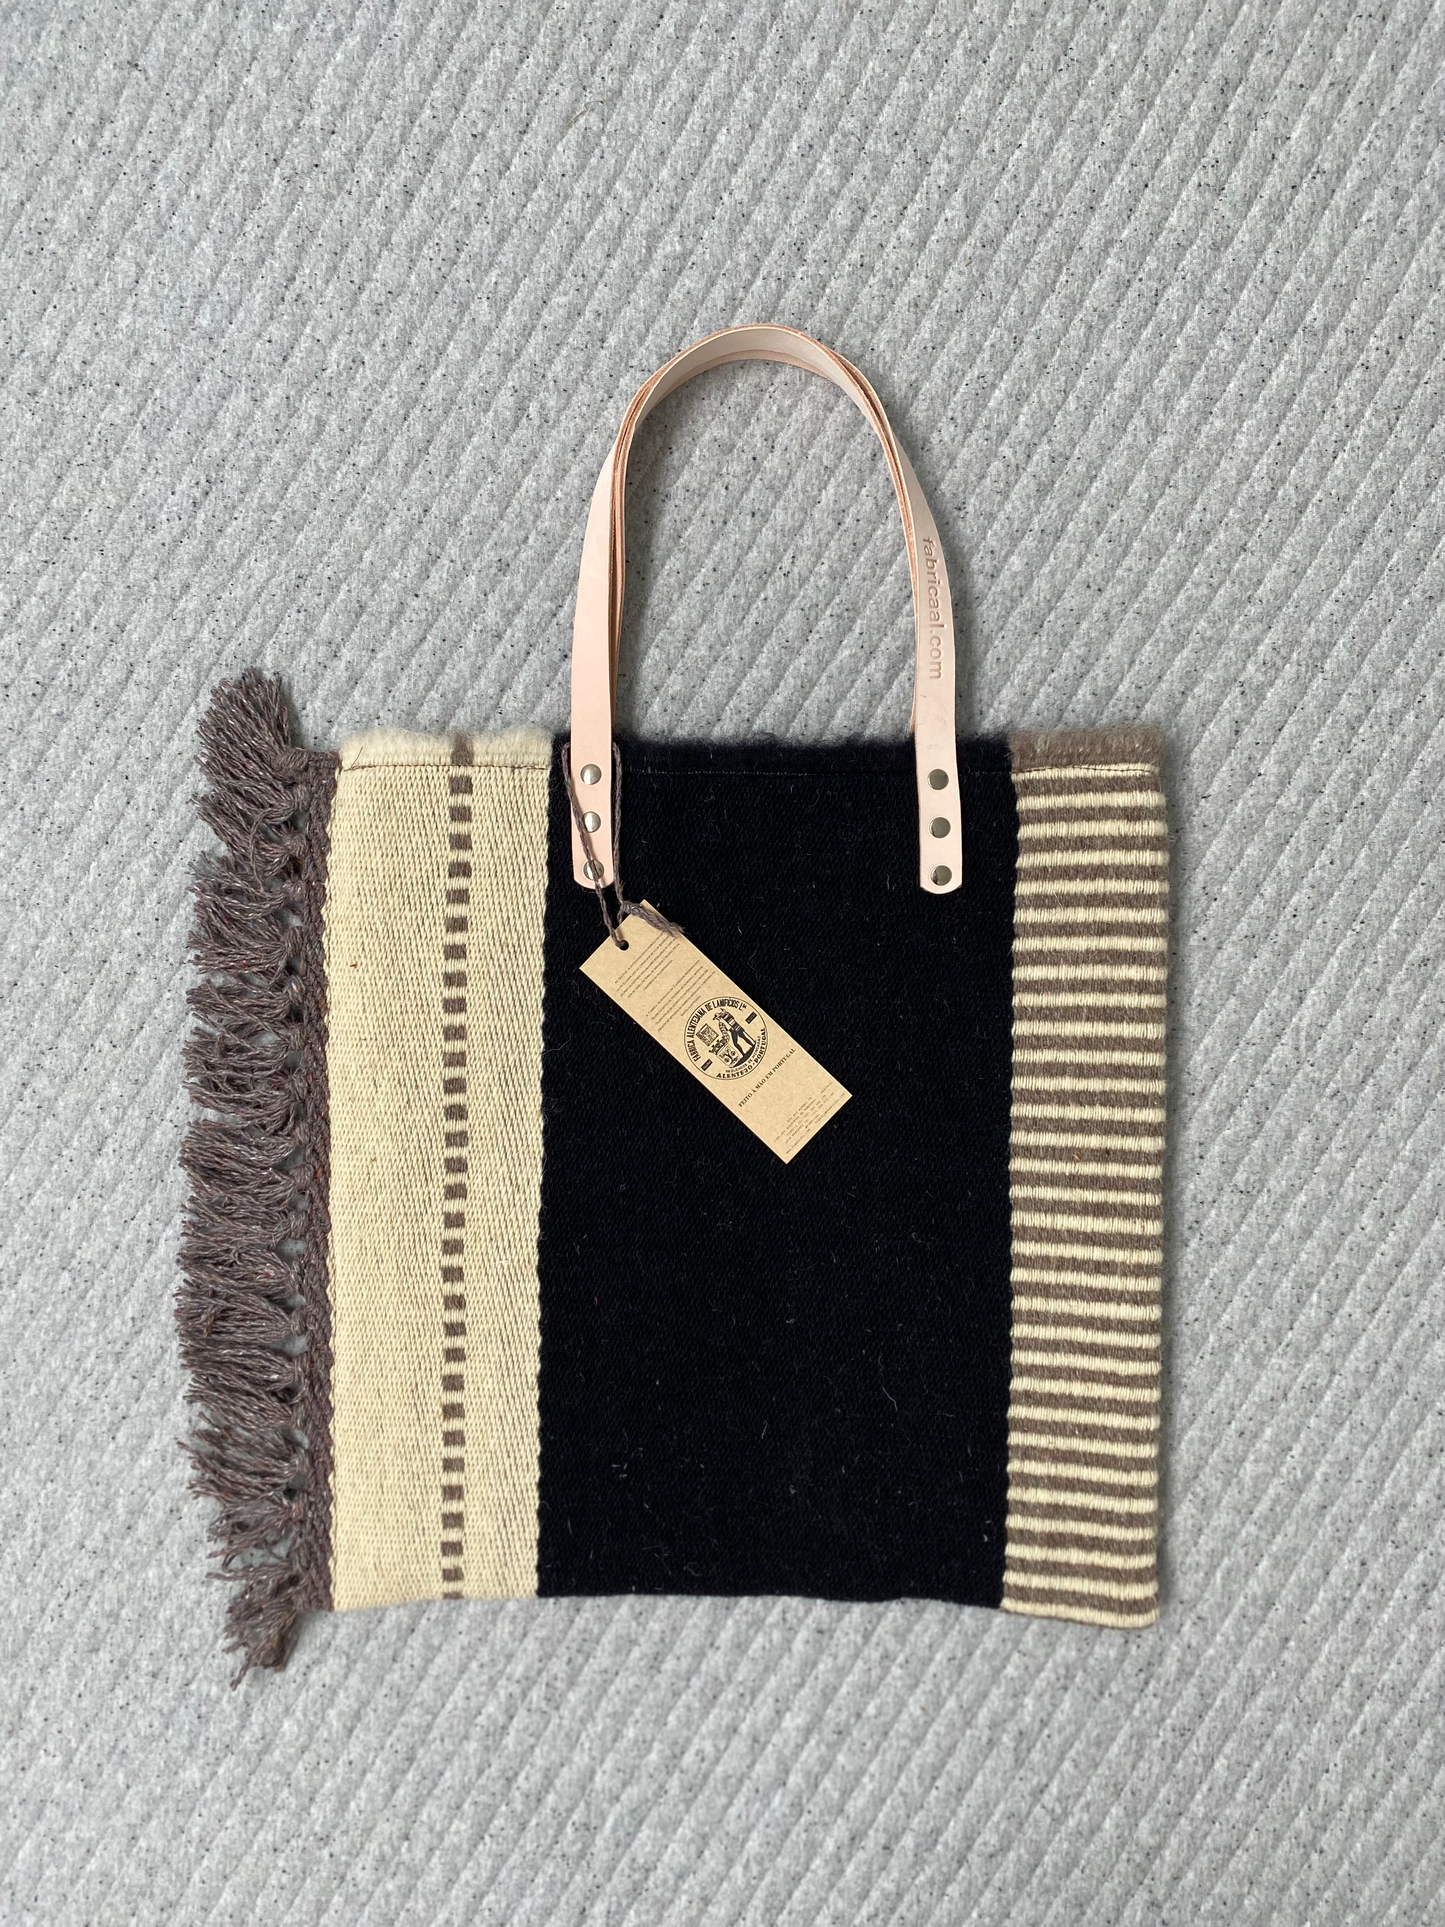 FABRICAAL // Leather & Fringe Large Handbag "Gil"